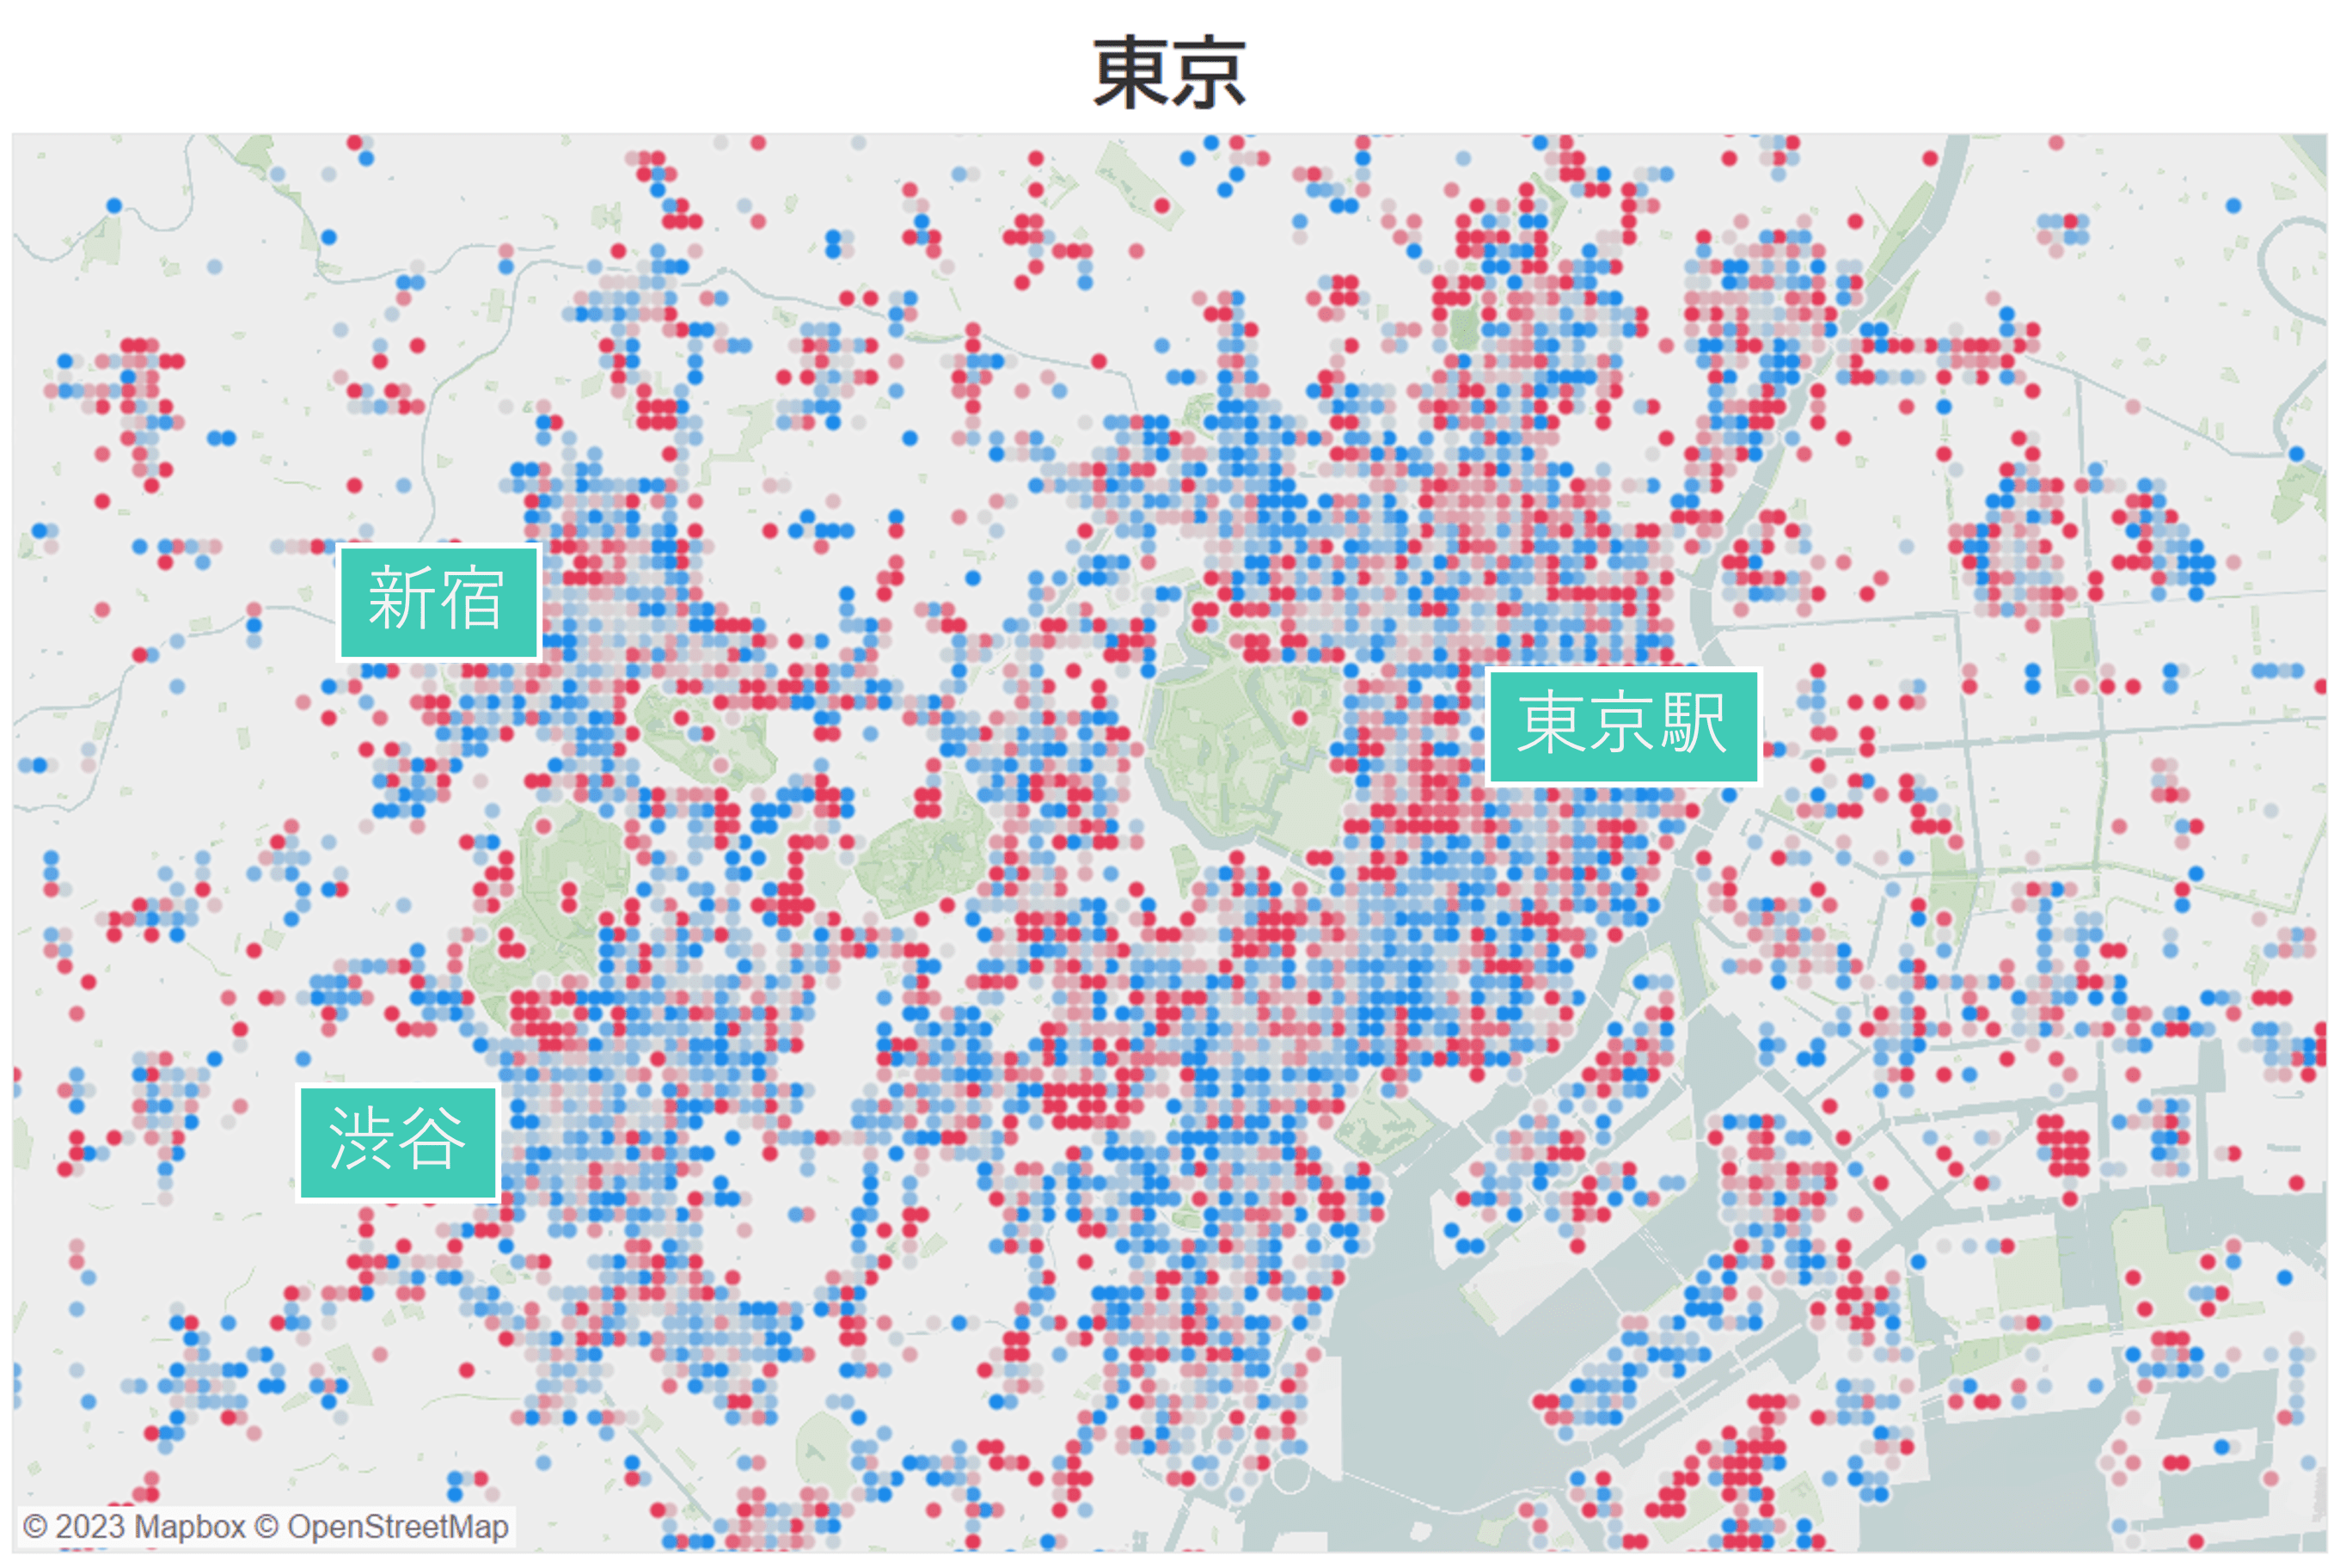 東京23区近郊の旅行・観光者増加率マップ（昨年比）